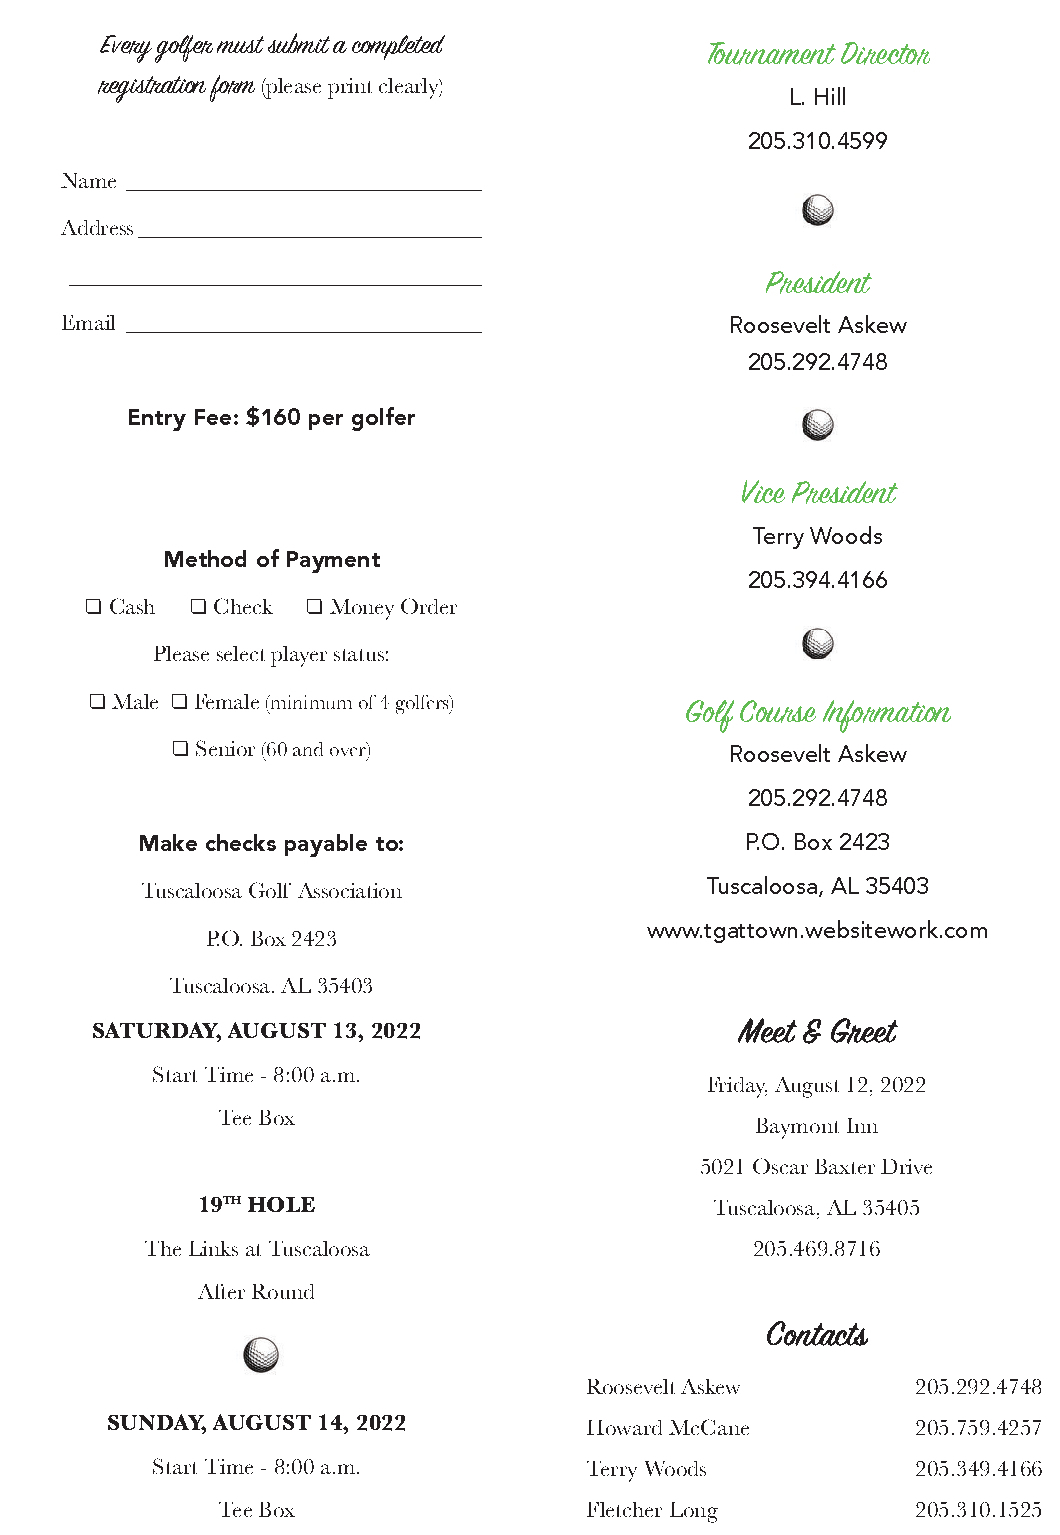 Register for Tuscaloosa Golf Tournament